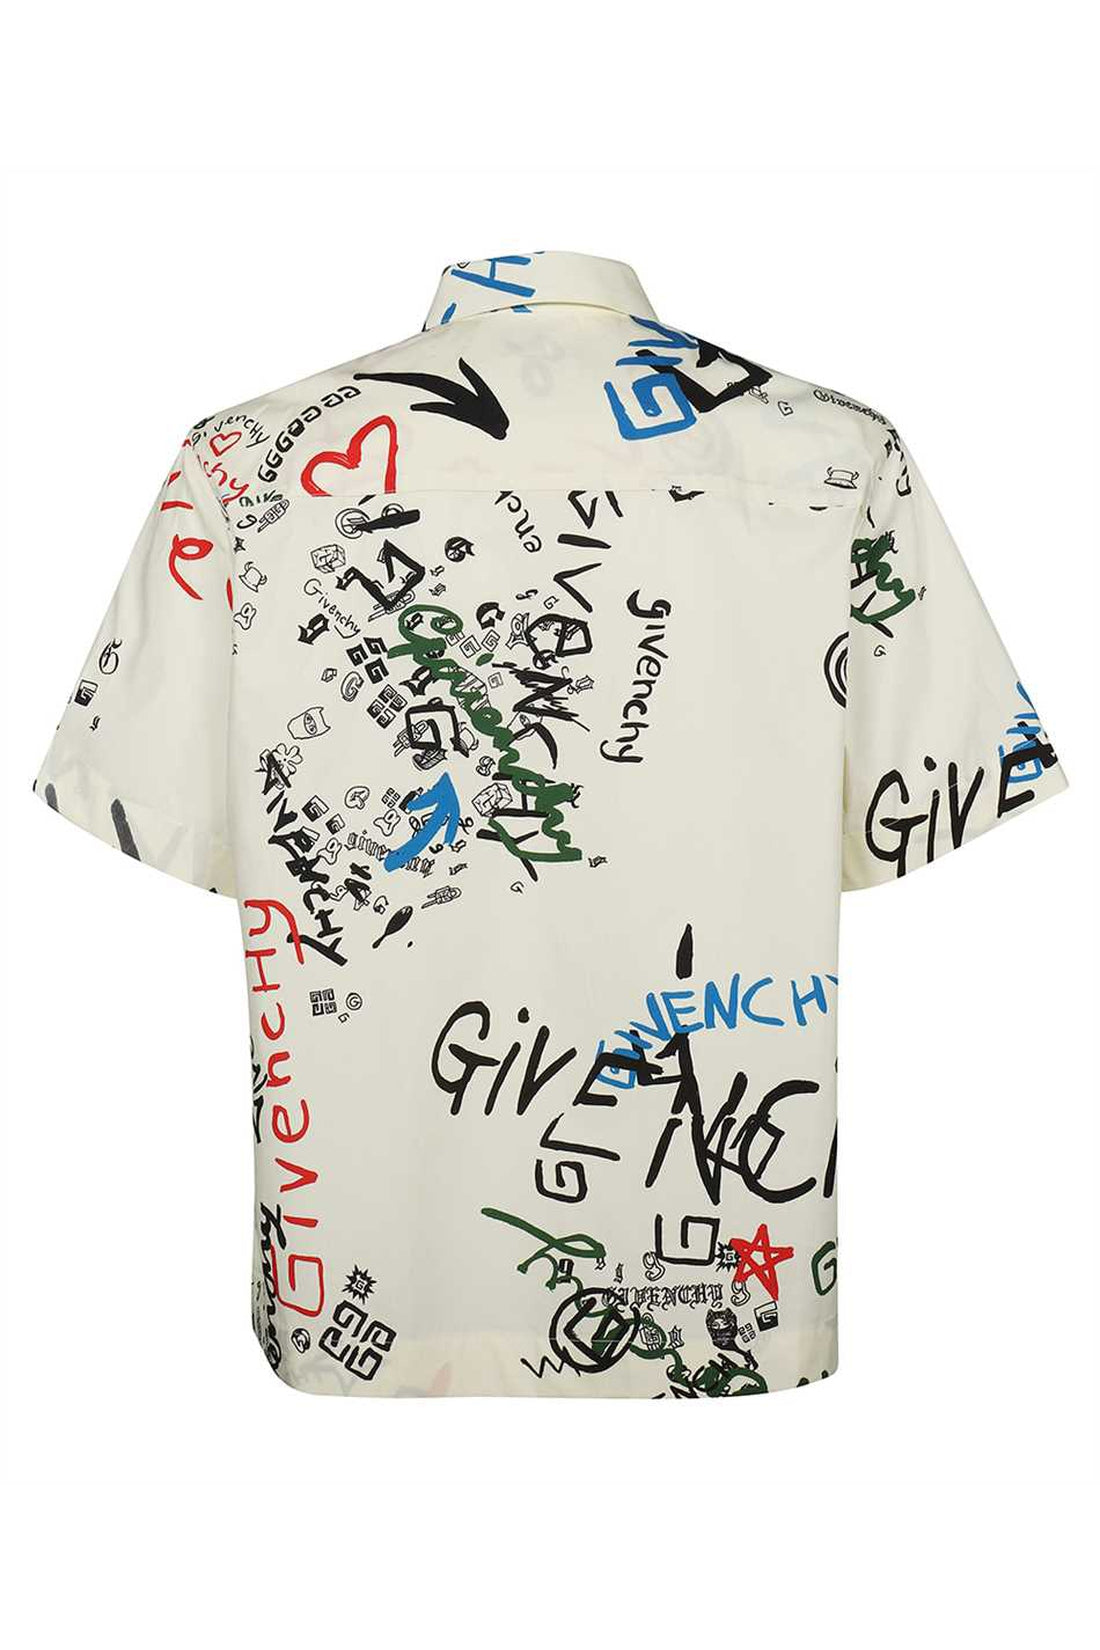 Givenchy-OUTLET-SALE-Printed cotton shirt-ARCHIVIST